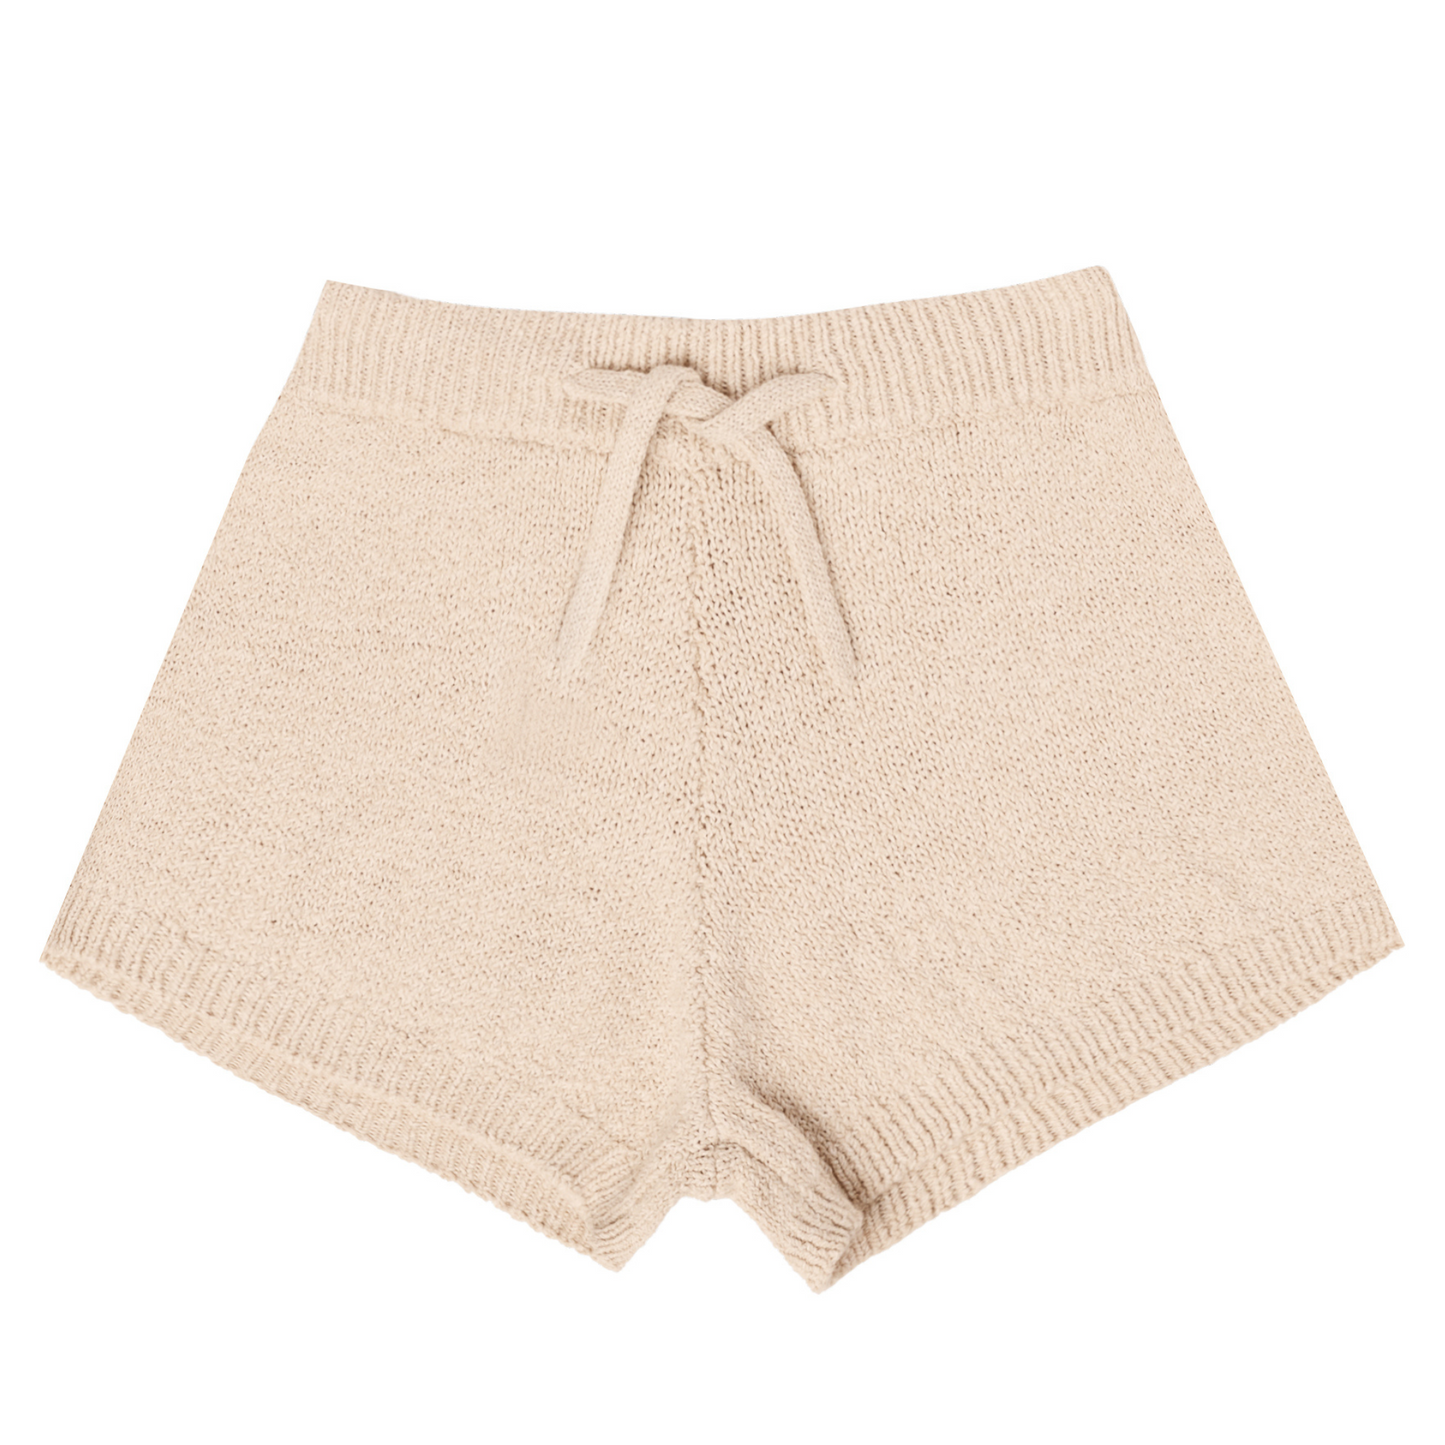 Rylee & Cru Knit Shorts, Heathered Shell